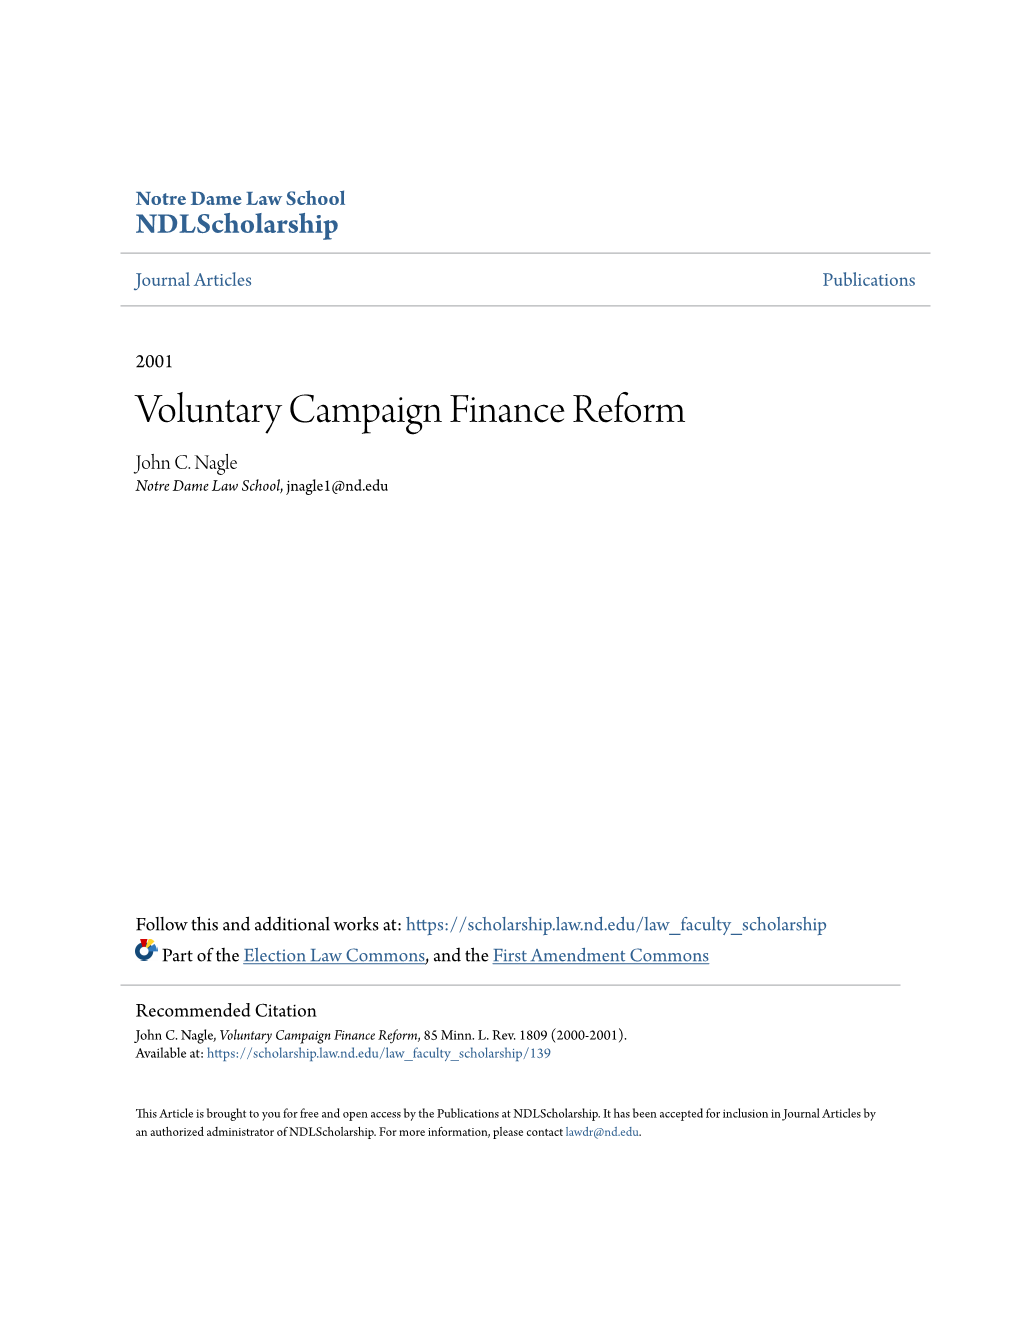 Voluntary Campaign Finance Reform John C